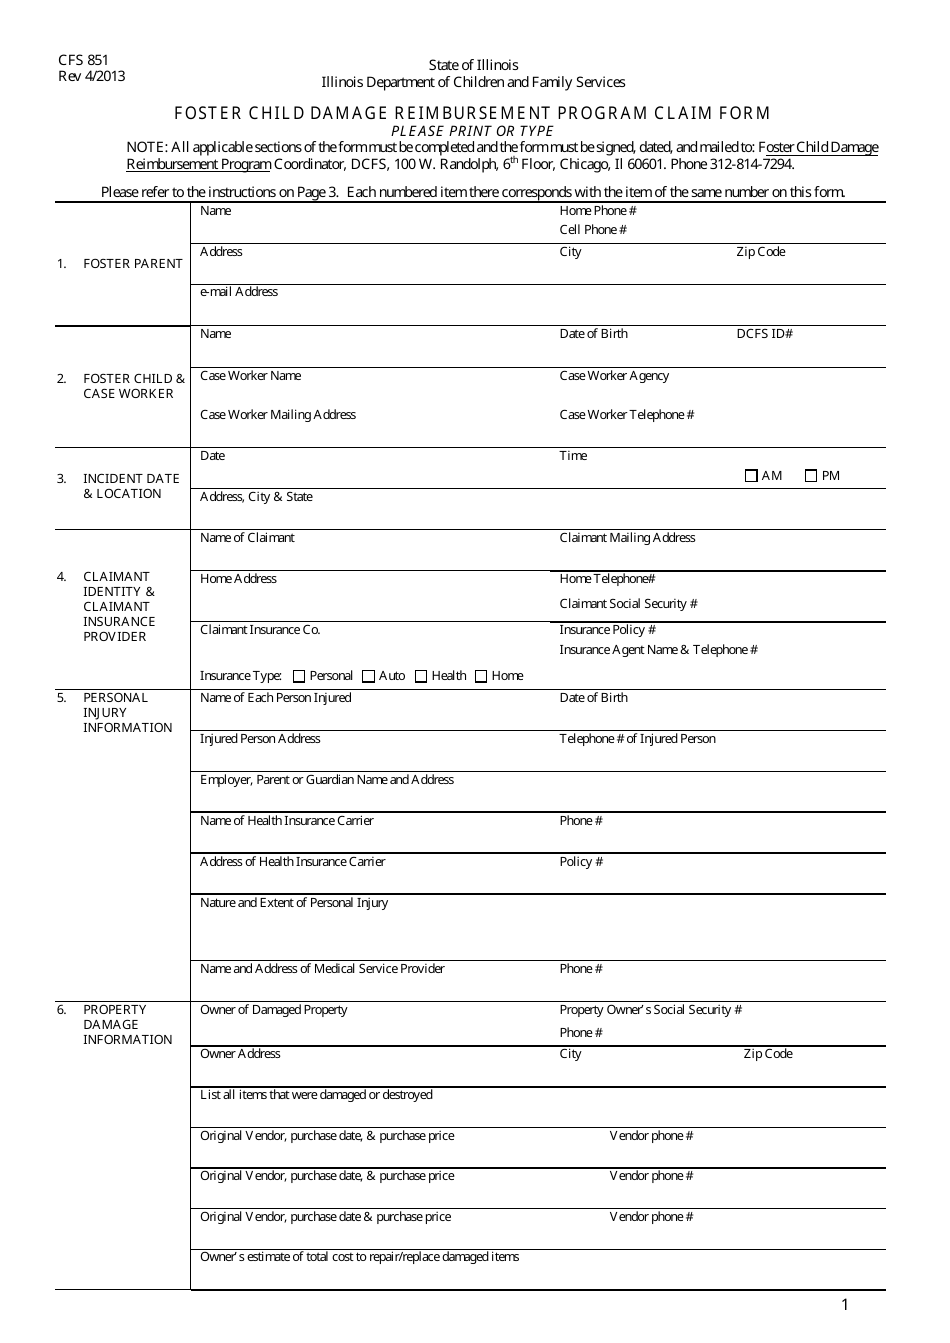 Form CFS851 Foster Child Damage Reimbursement Program Claim Form - Illinois, Page 1